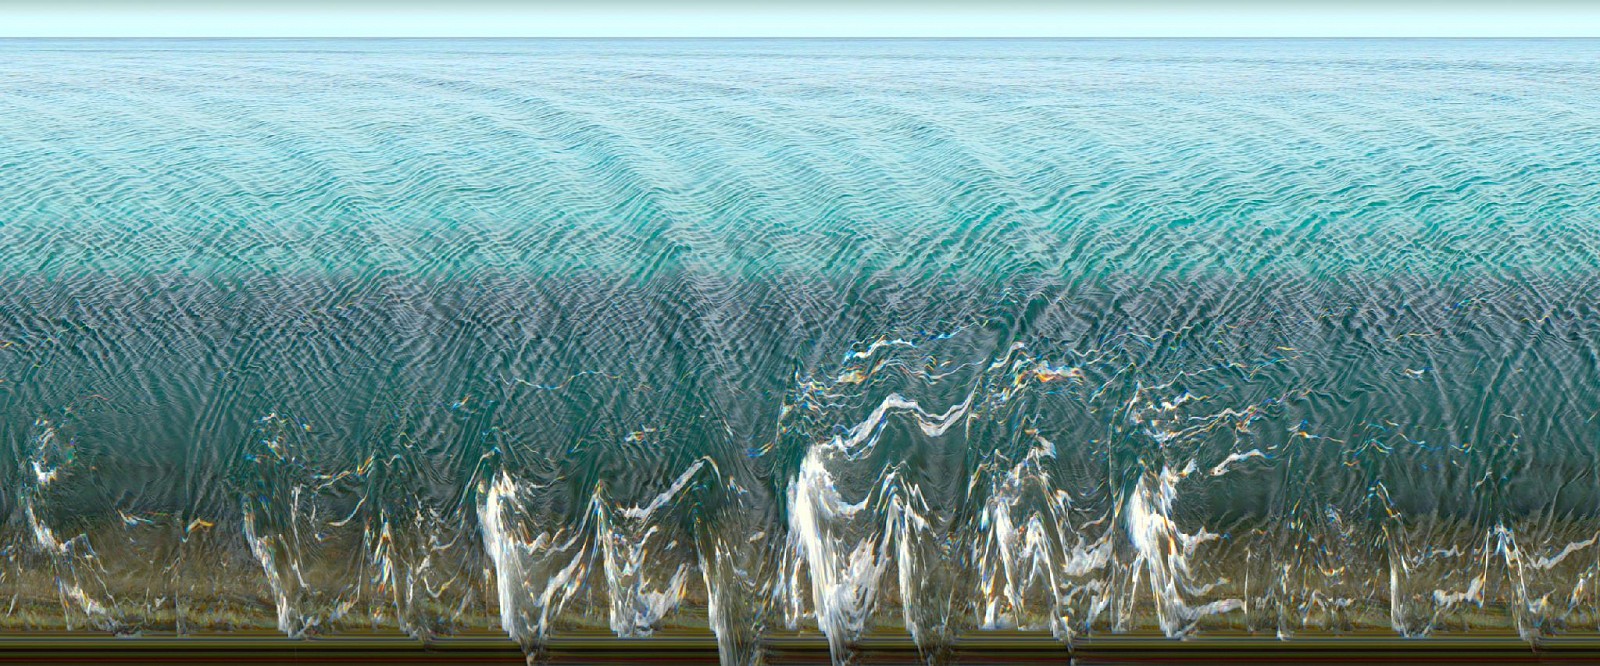 Jay Mark Johnson, COZUMEL WAVES #10, 2009 Cozumel MX
archival pigment on paper, mounted on aluminum, 40 x 96 in. (101.6 x 243.8 cm)